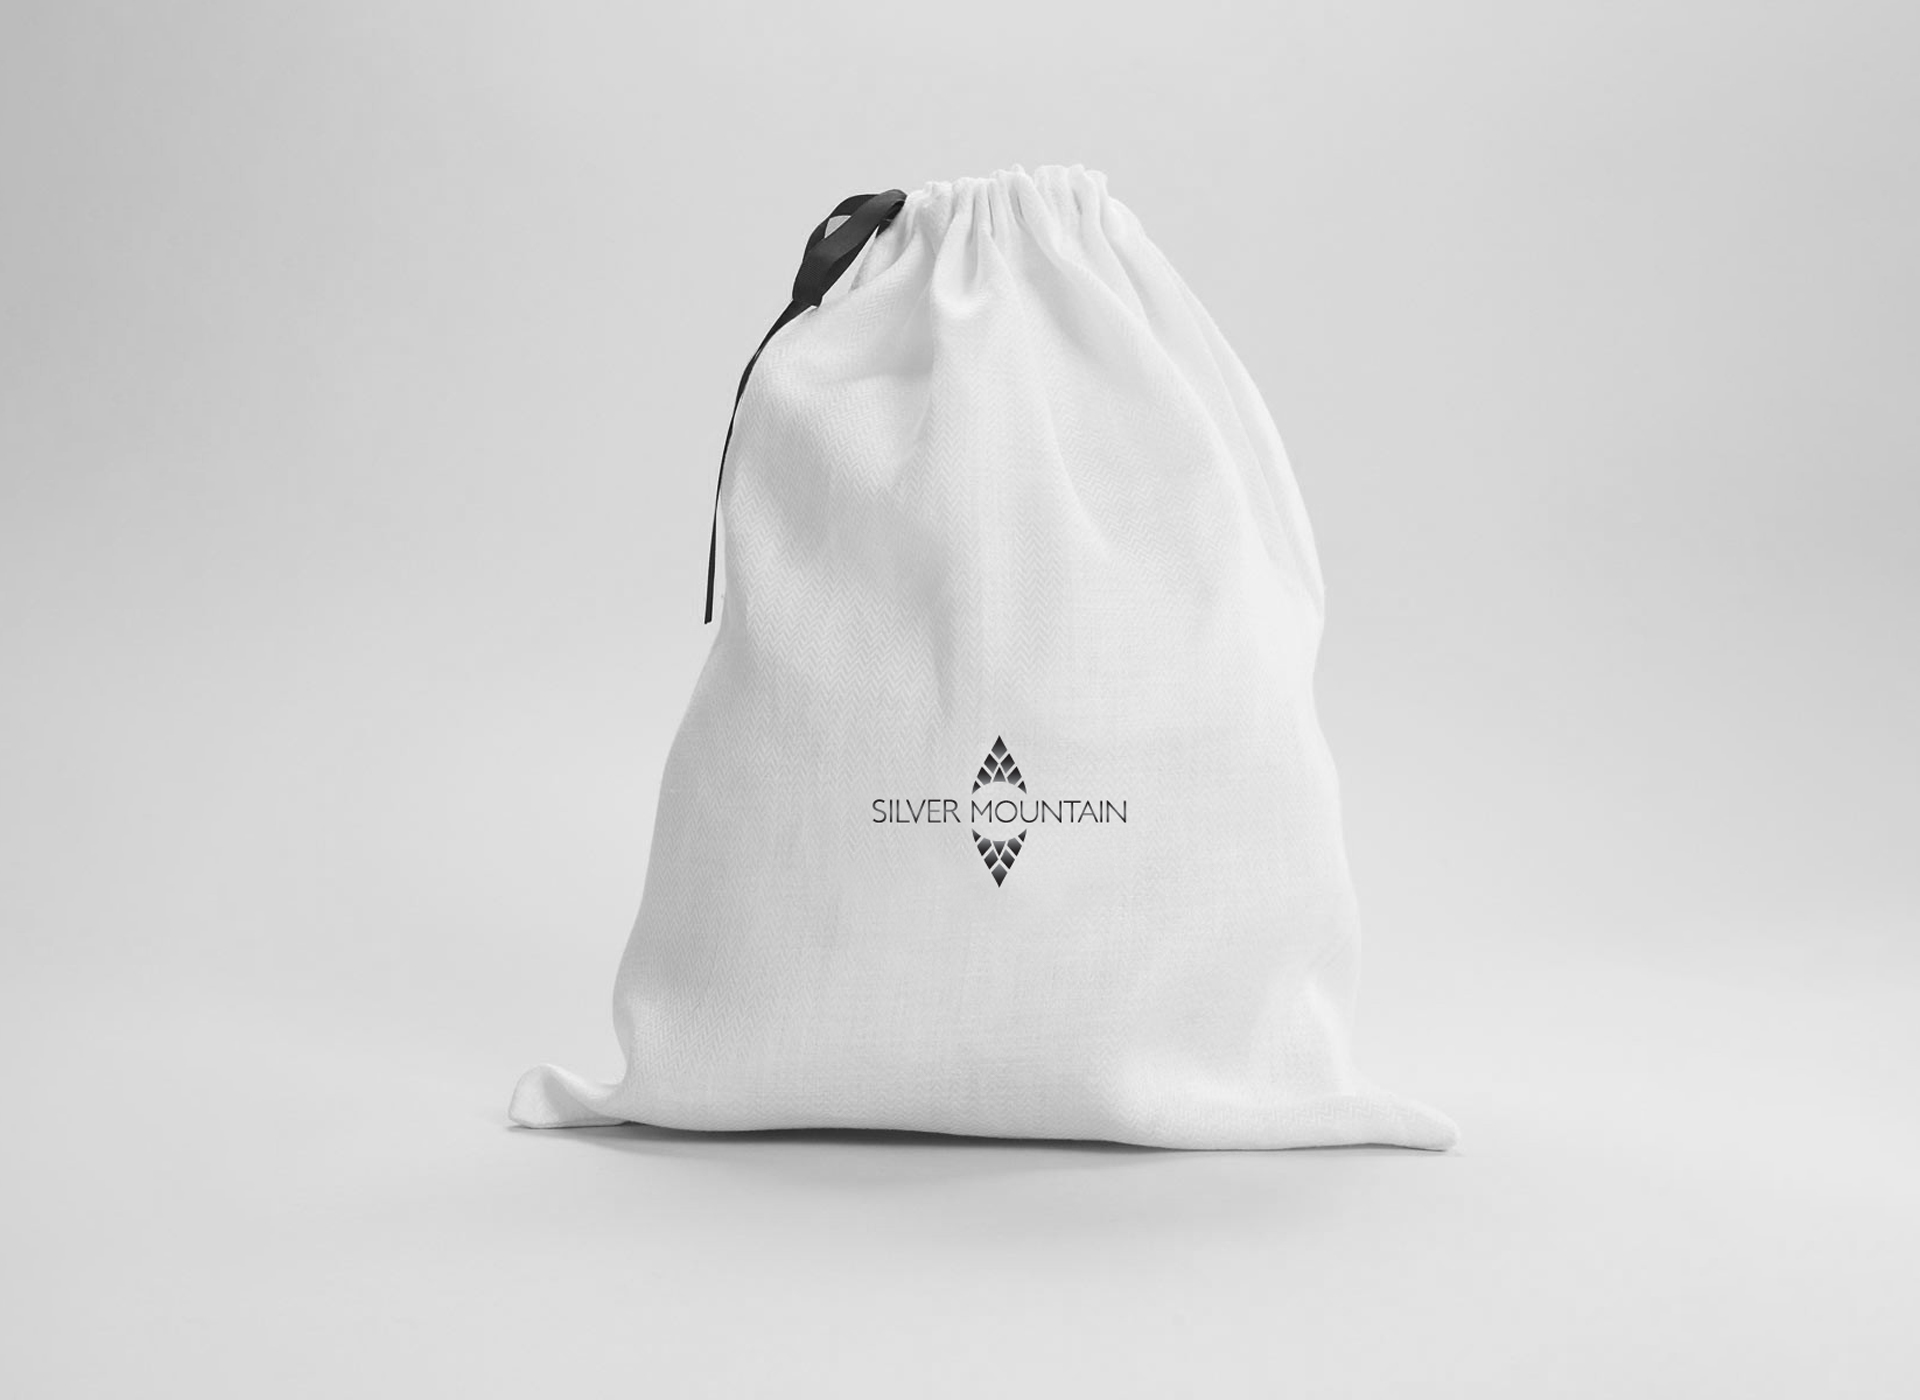 Silver Mountain portfolio inoveo bag